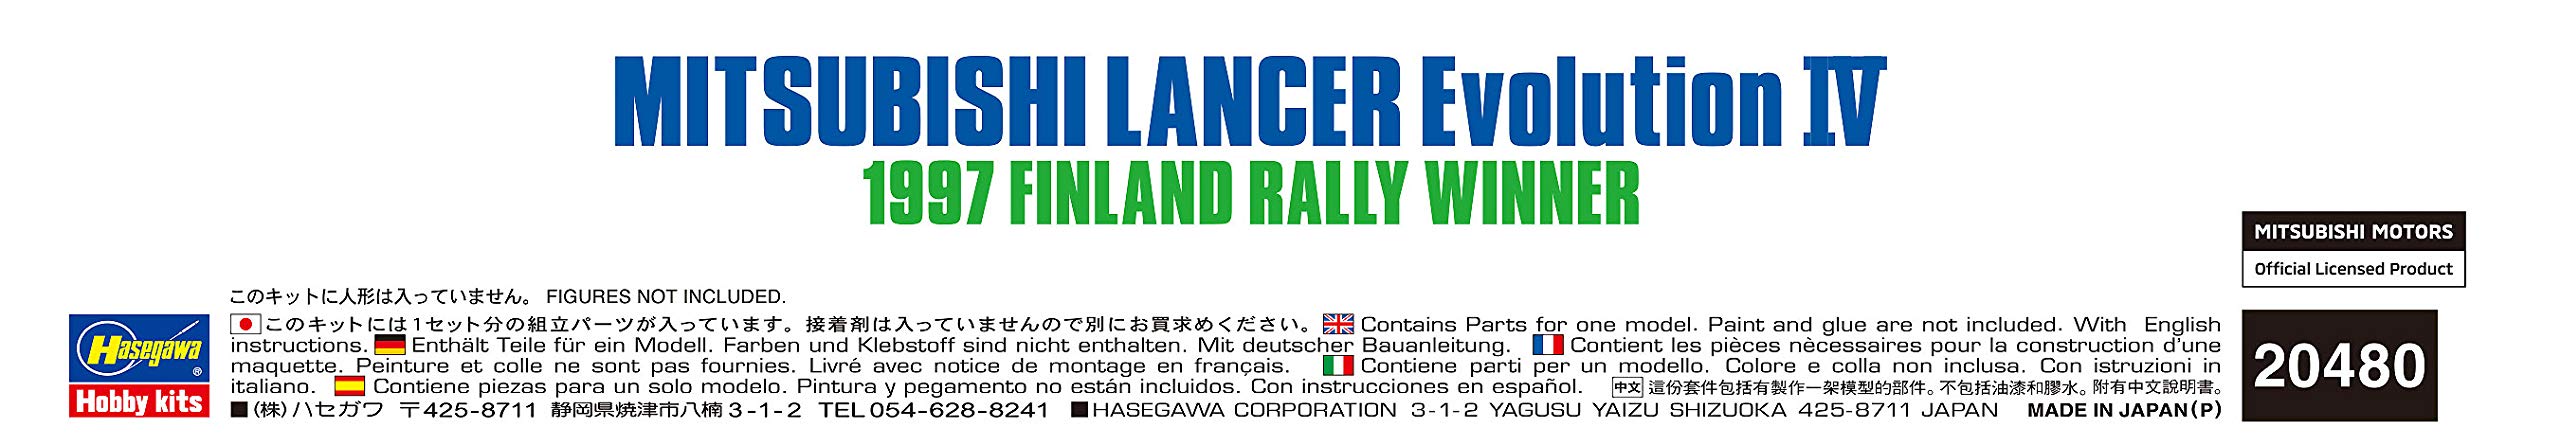 Hasegawa 1/24 Mitsubishi Lancer Evolution IV 1997 Finland Rally Winner kit 20480_4